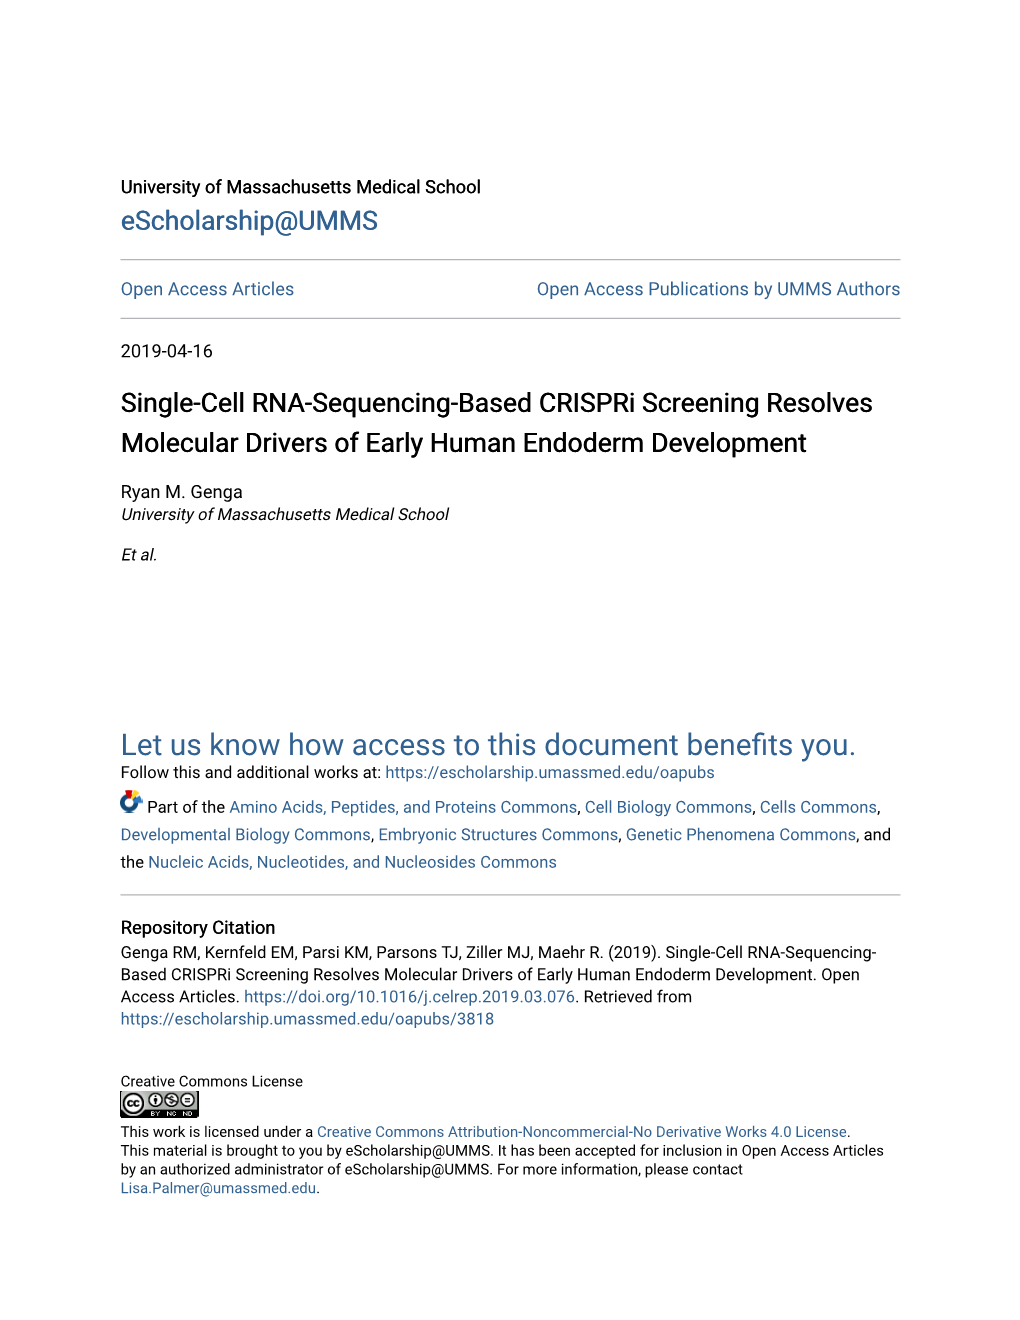 Single-Cell RNA-Sequencing-Based Crispri Screening Resolves Molecular Drivers of Early Human Endoderm Development